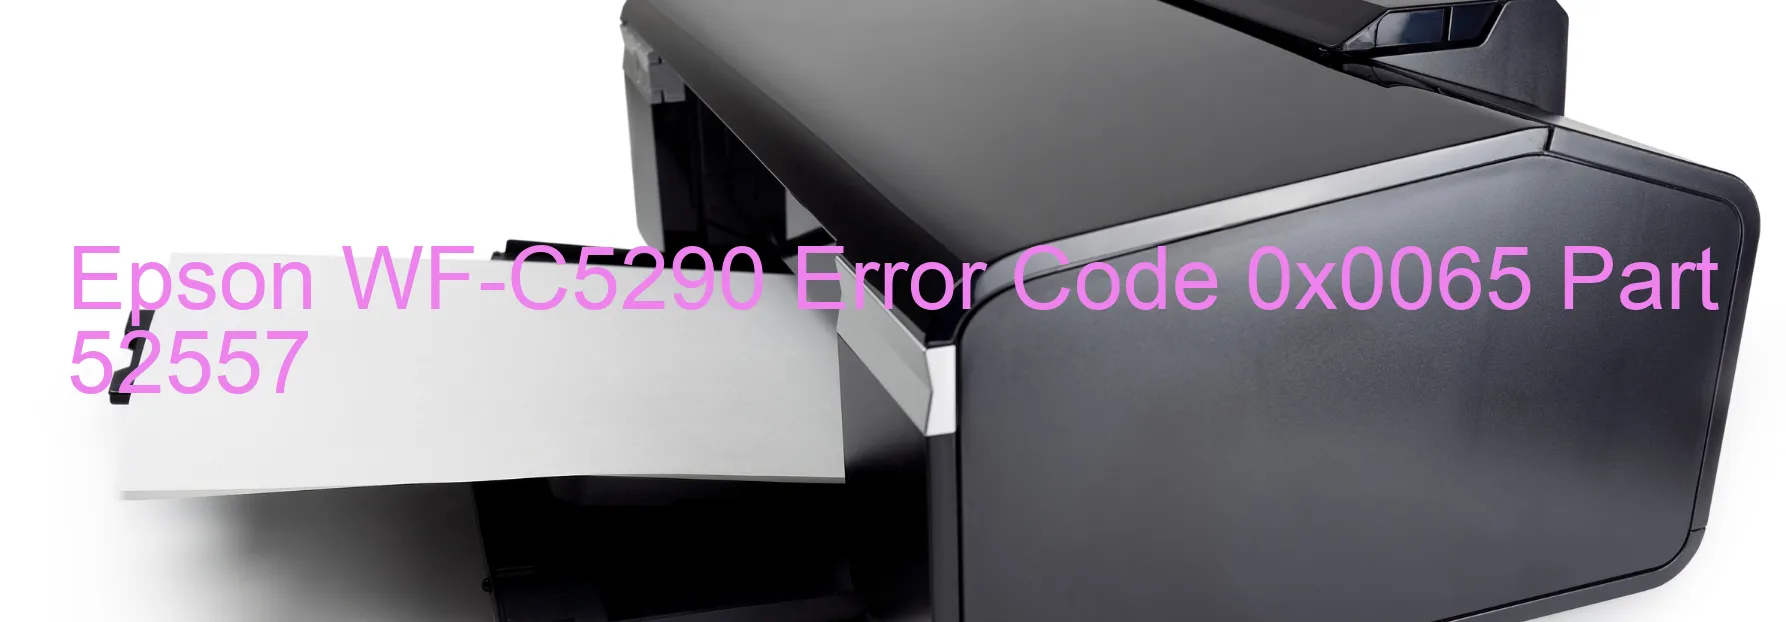 Epson WF-C5290 Error Code 0x0065 Part 52557